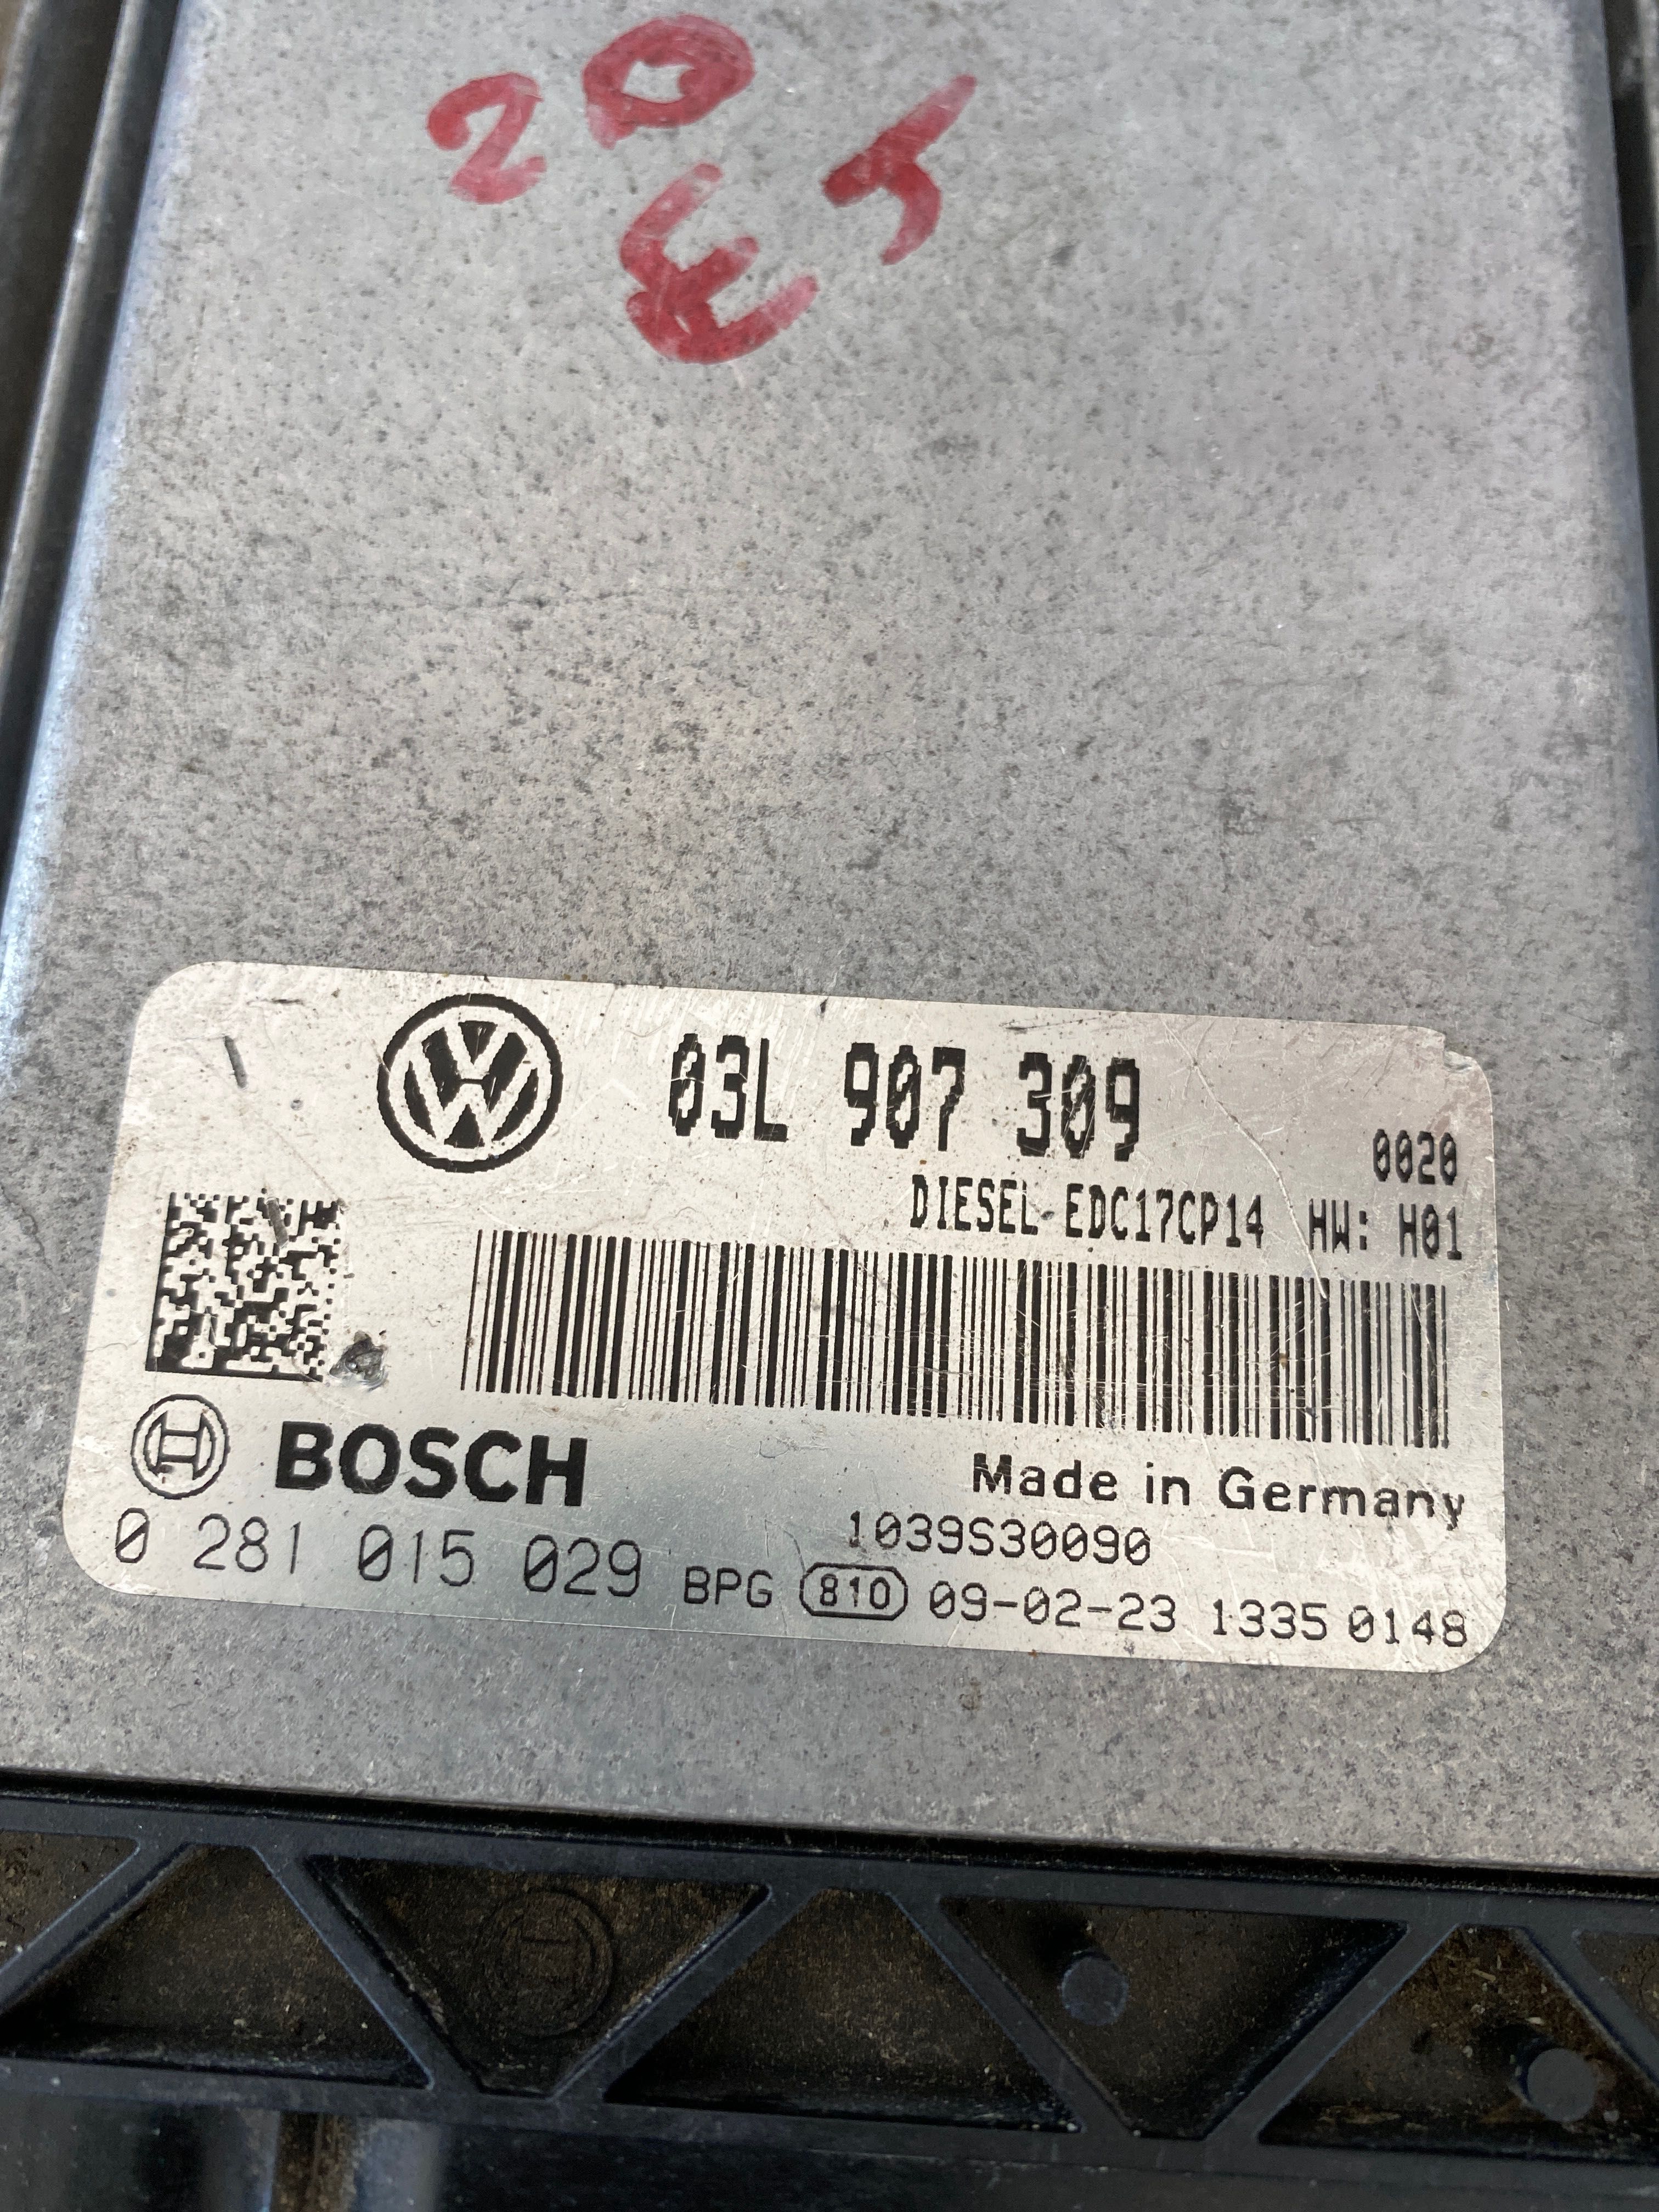 Calculator motor VW Passat/ cod 03L 907 309/ 0 281 015 029